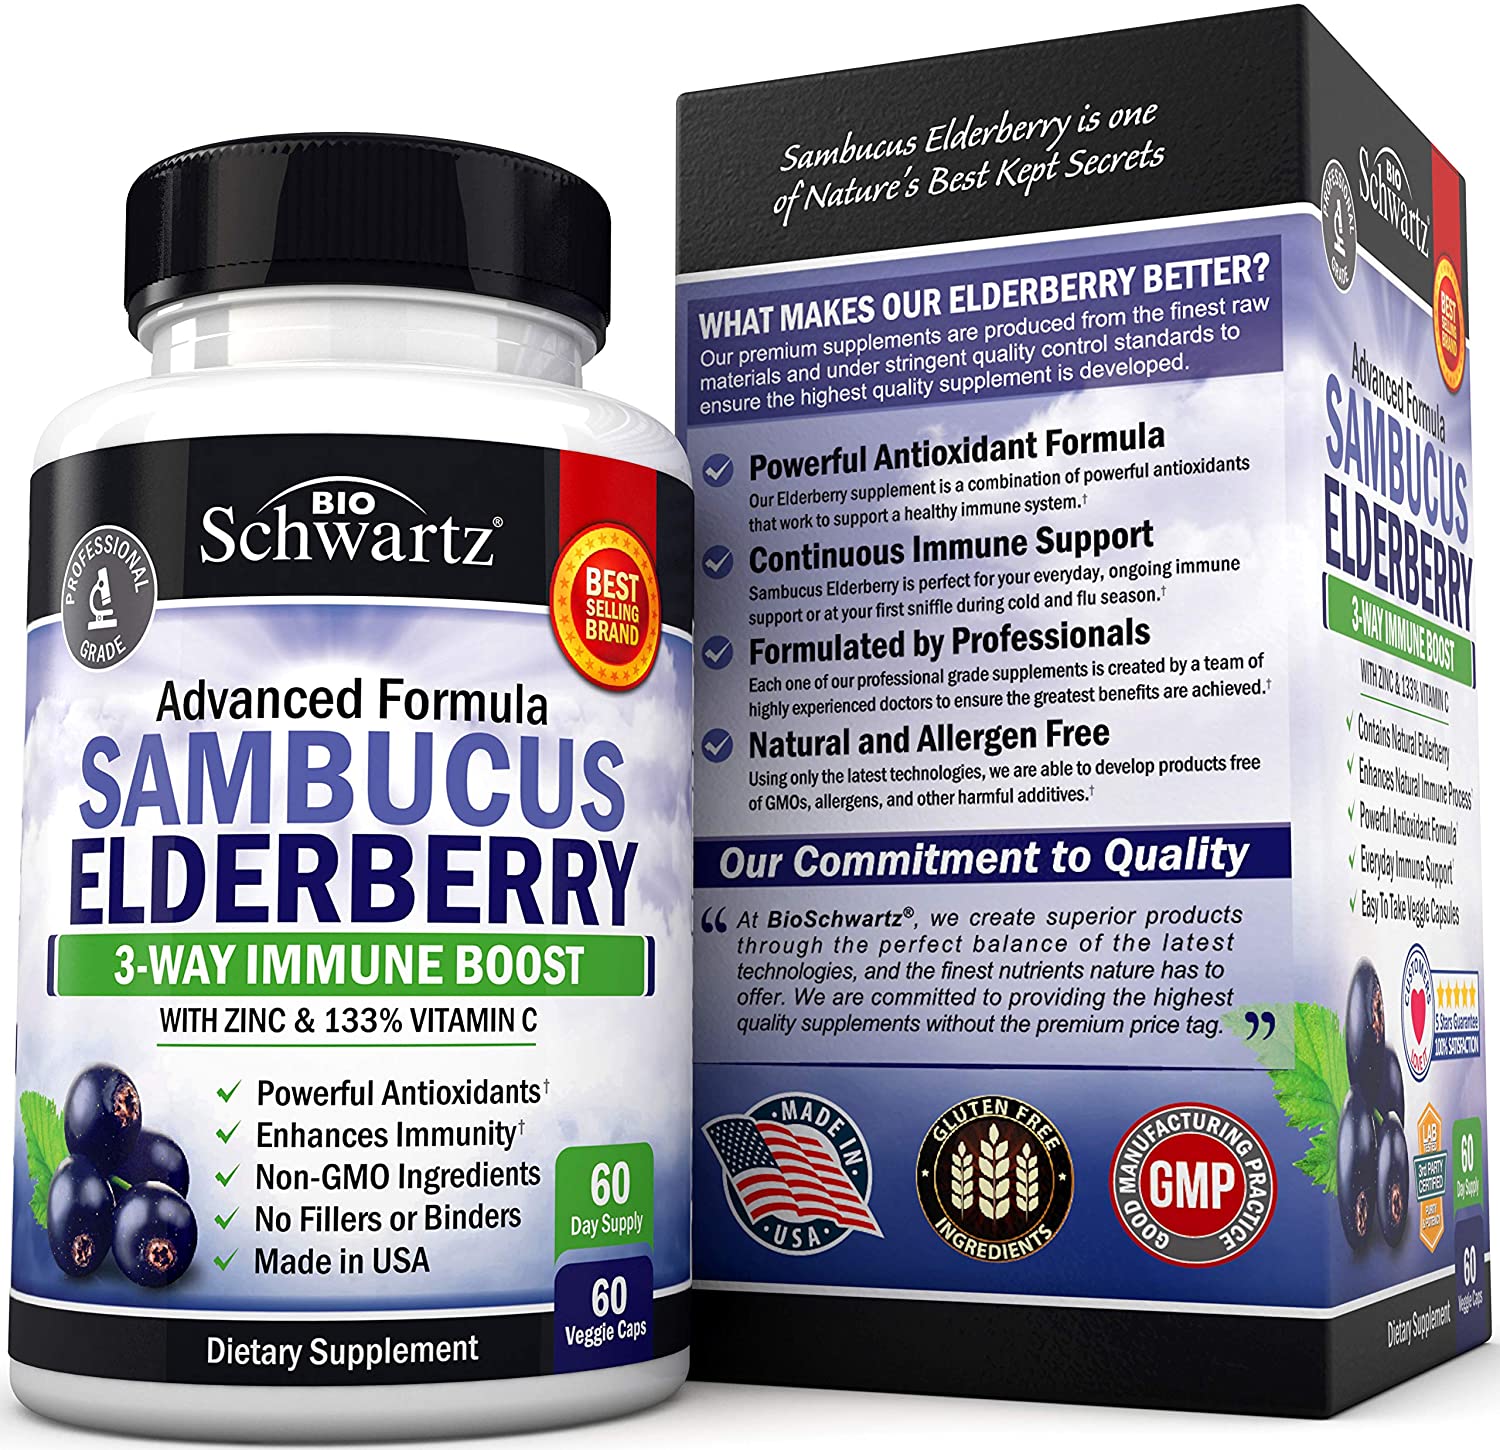 Sambucus Elderberry Capsules with Zinc & Vitamin C by BioSchwartz